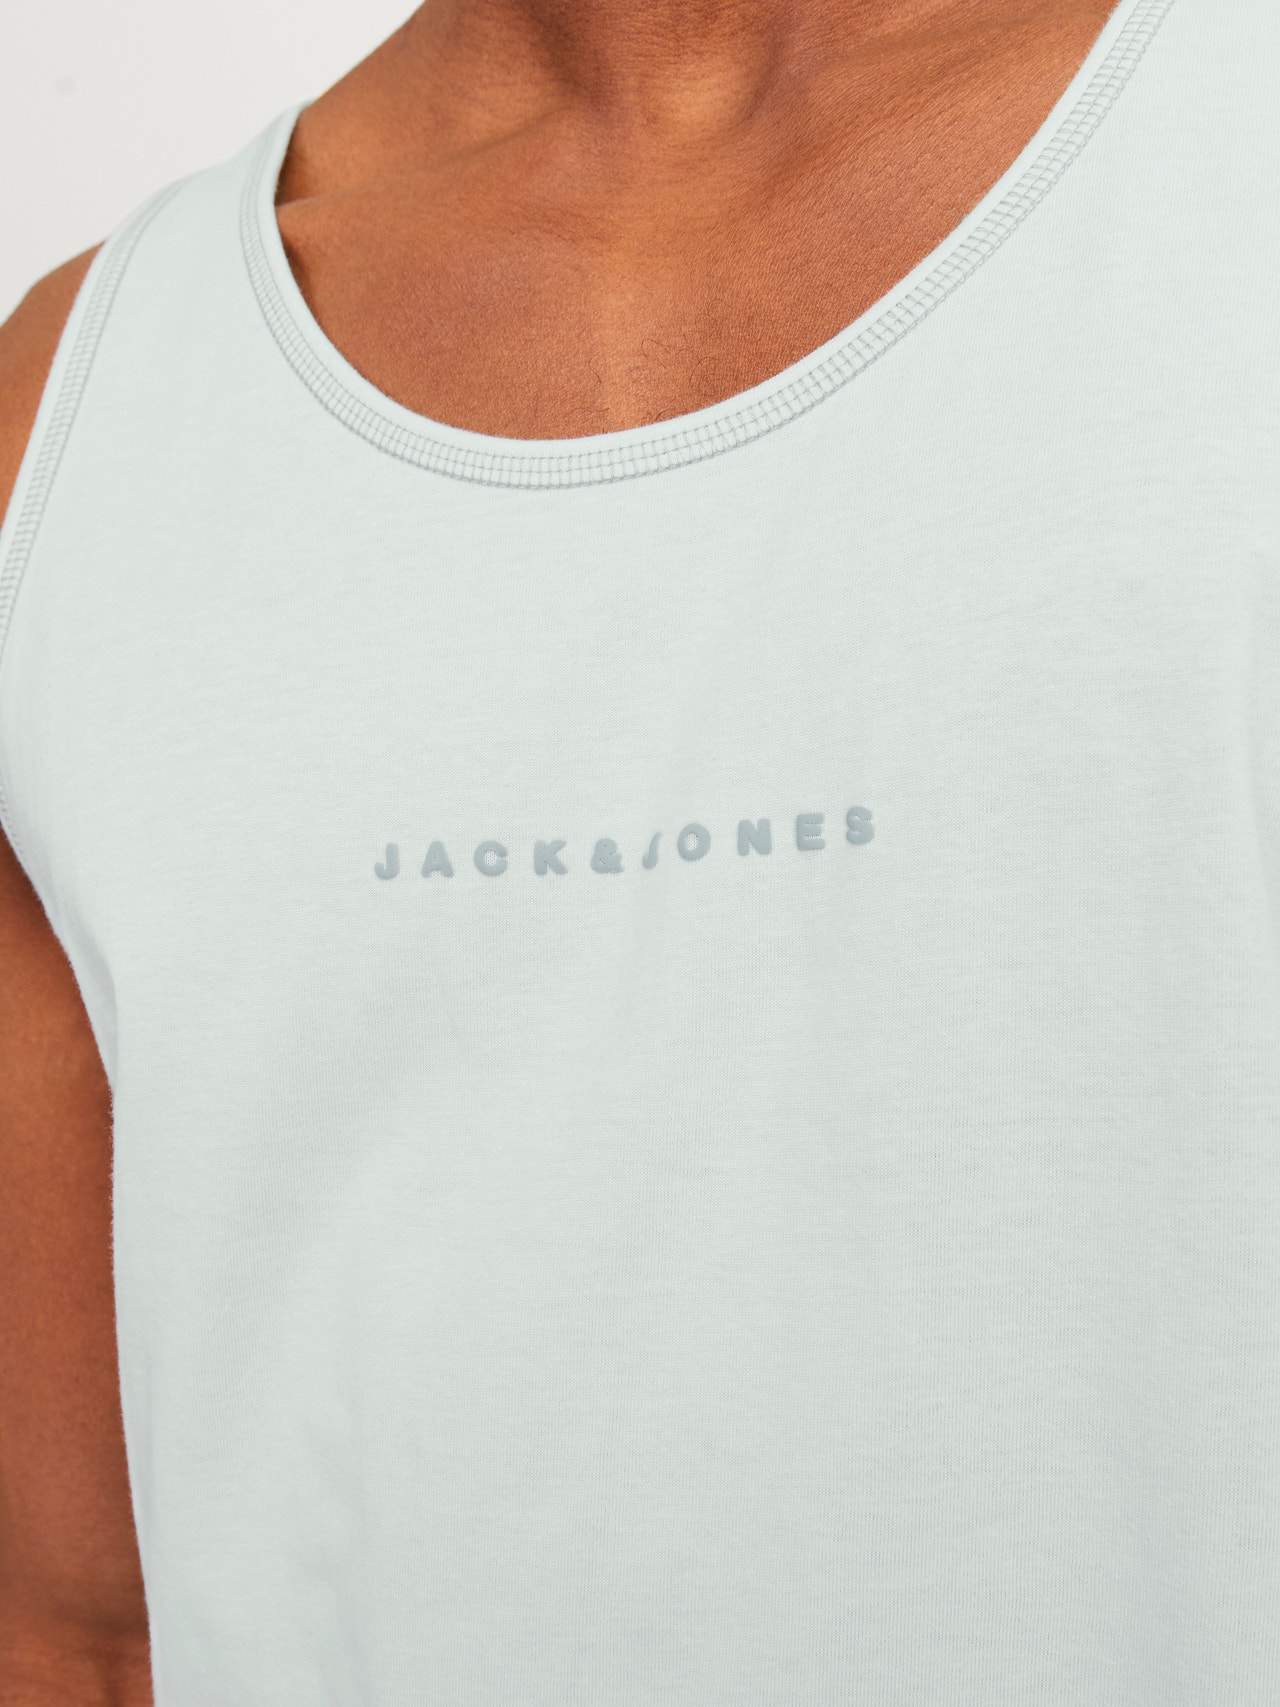 Jack & Jones Printed Crew neck Tank top -Skylight - 12255383